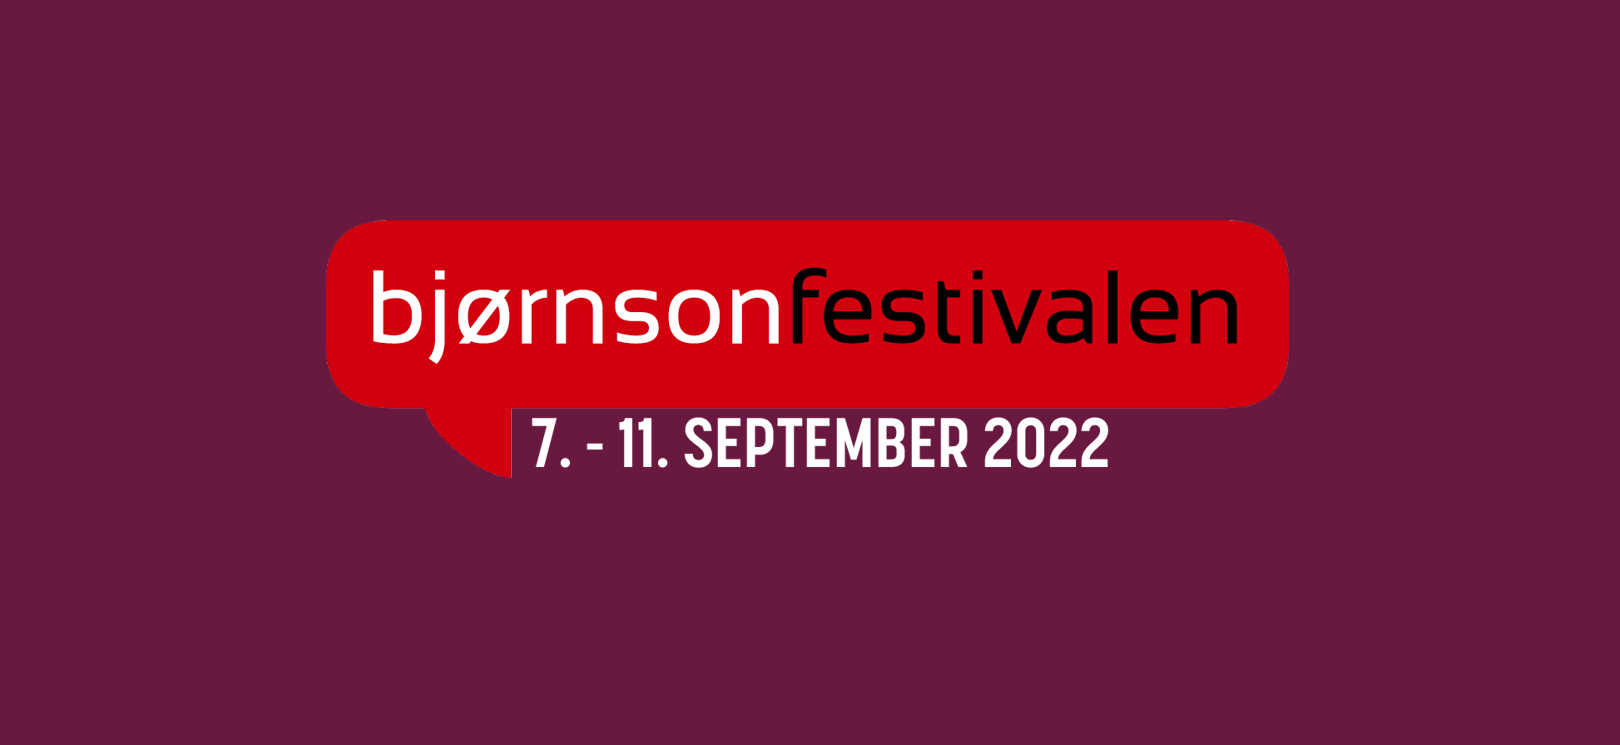 Bjornsonfestivalen 2022